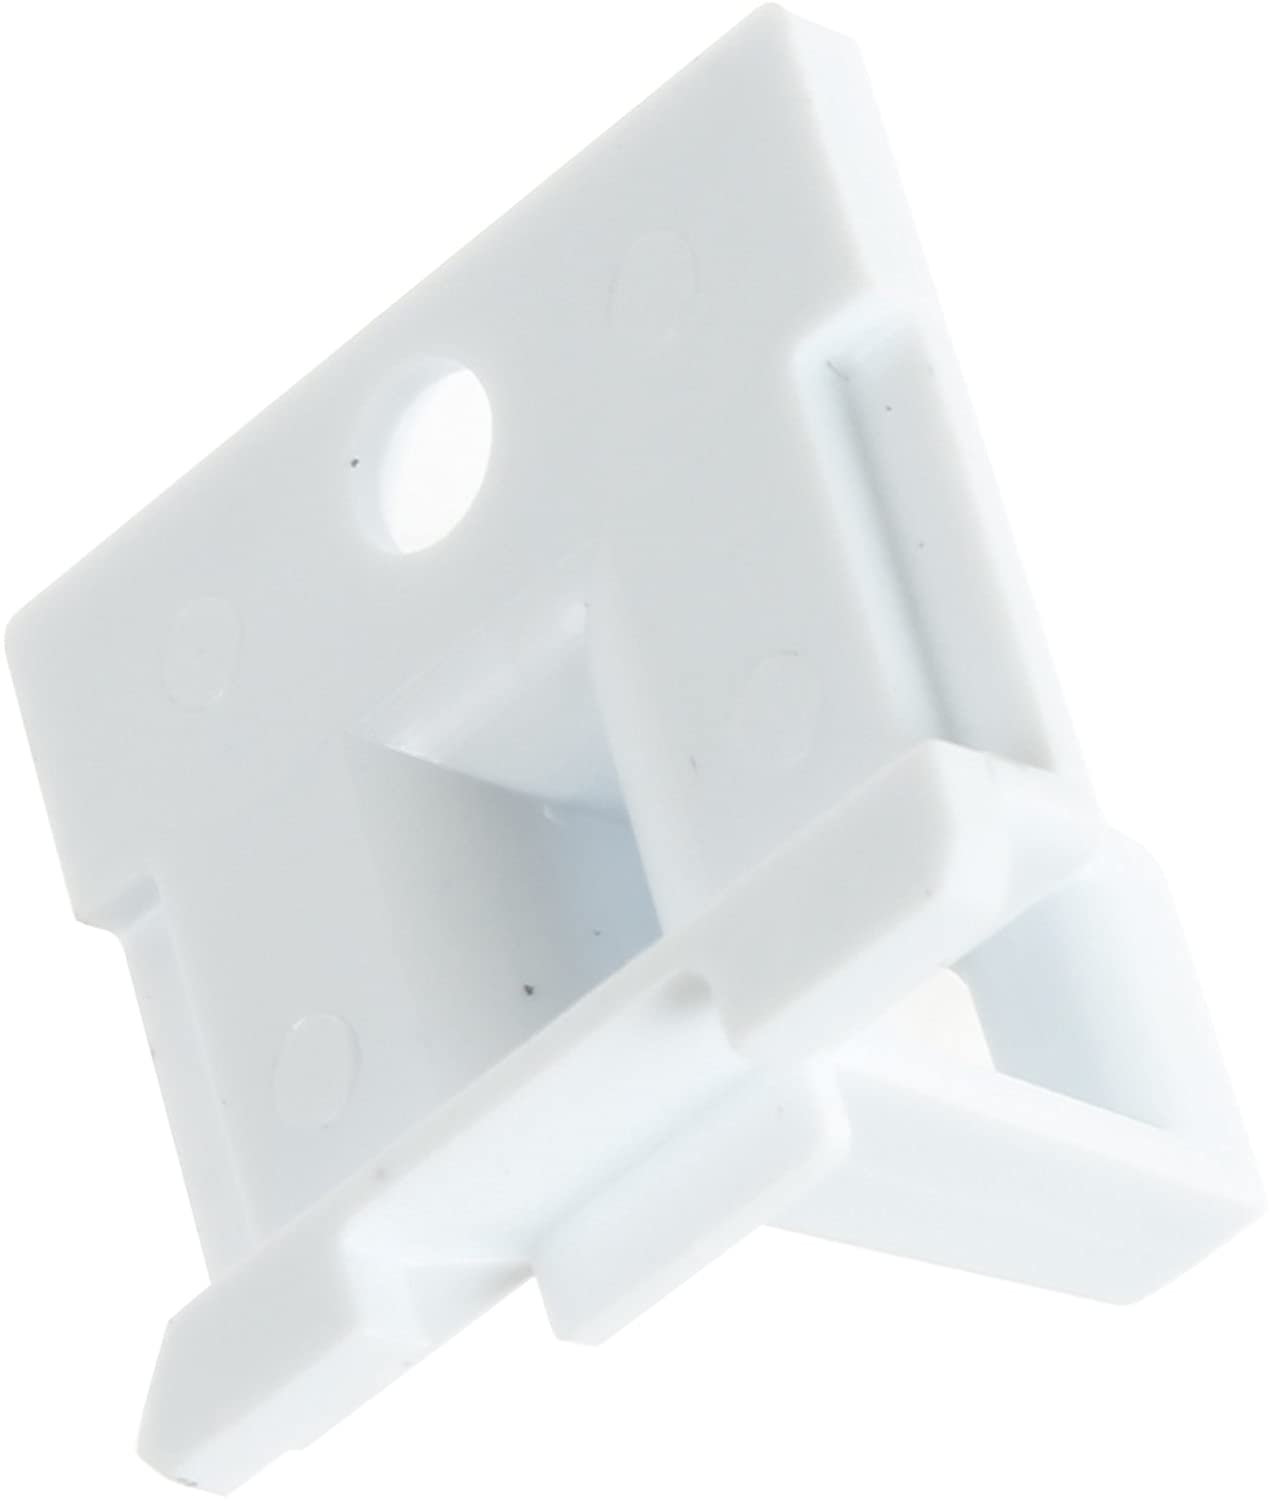 INDESIT Tumble Dryer Door Lock/Plastic Catch Hook (White)